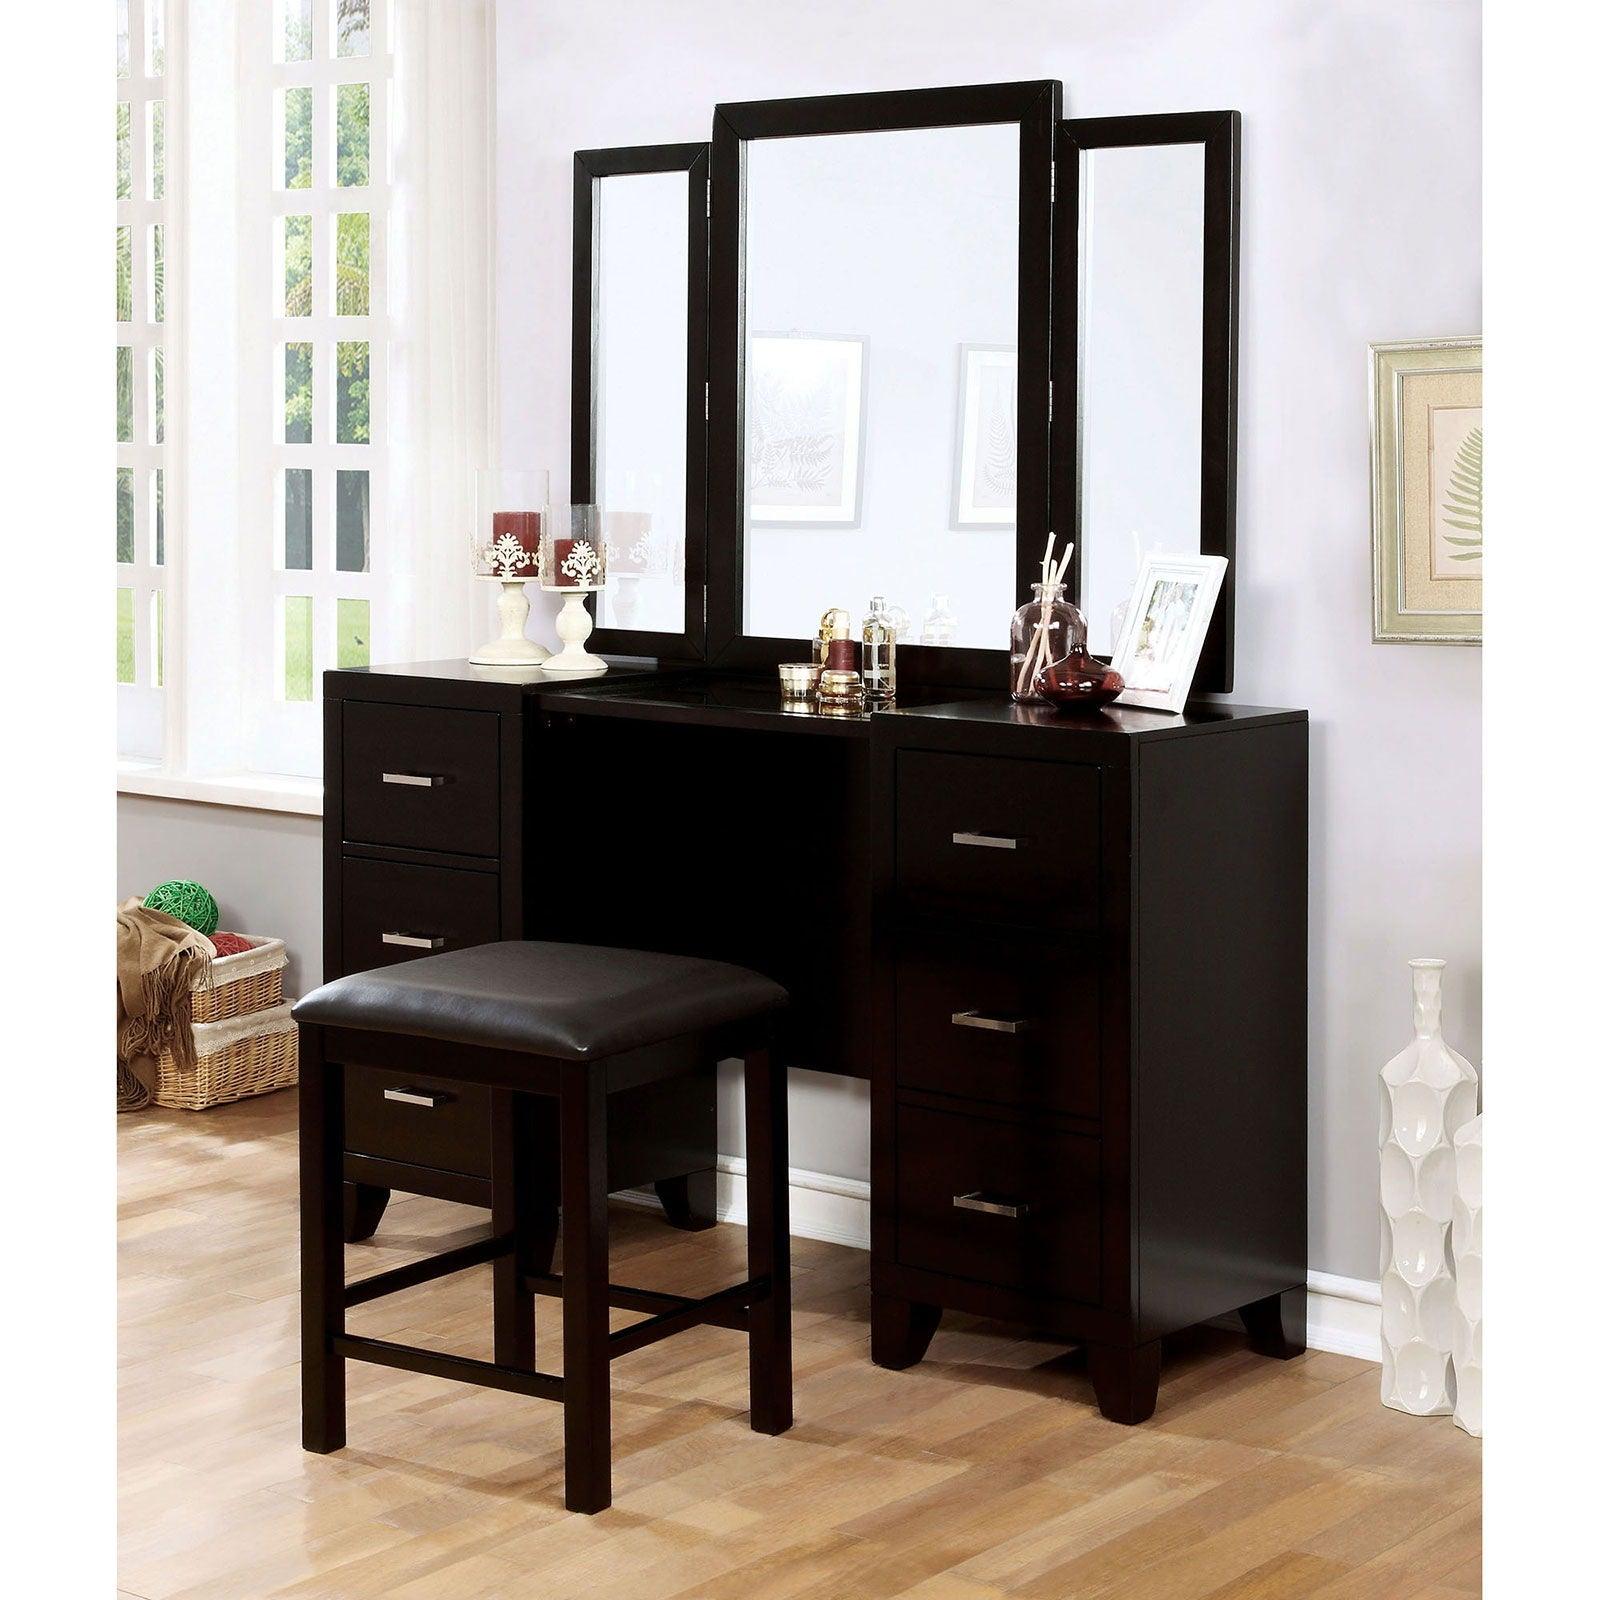 Furniture of America - Enrico - Vanity With Stool - Espresso - 5th Avenue Furniture